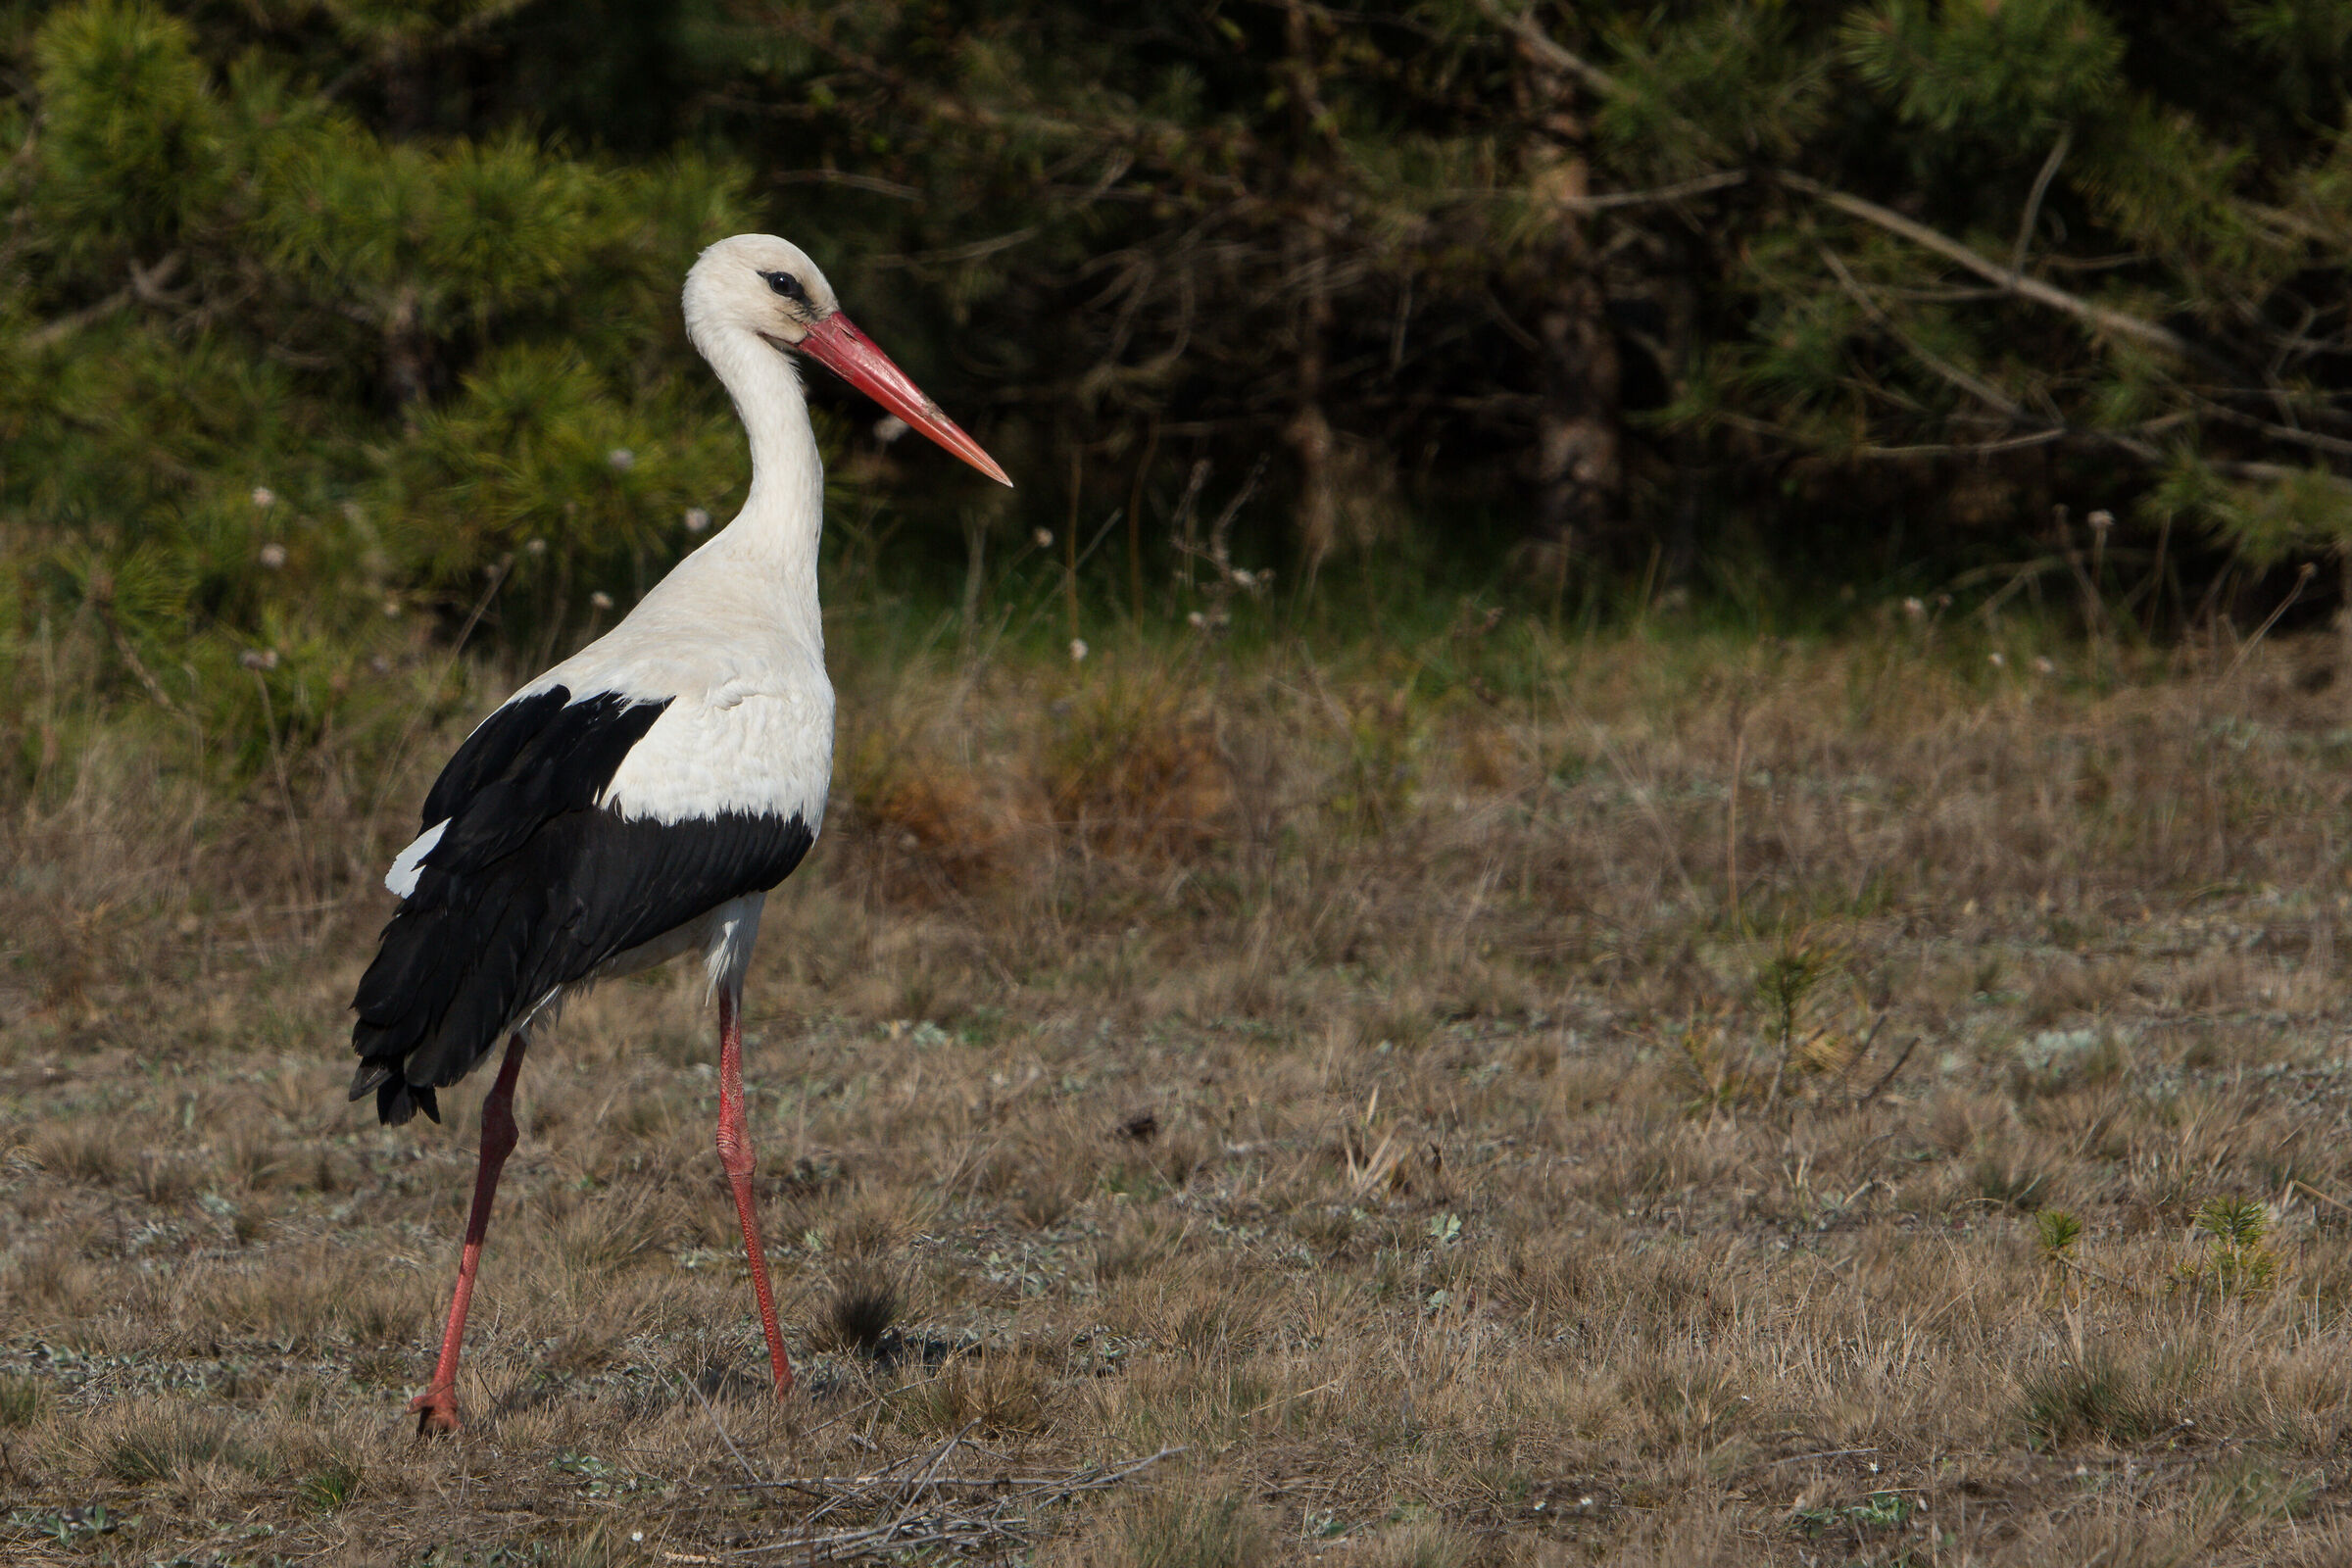 White stork (Ciconia ciconia)...